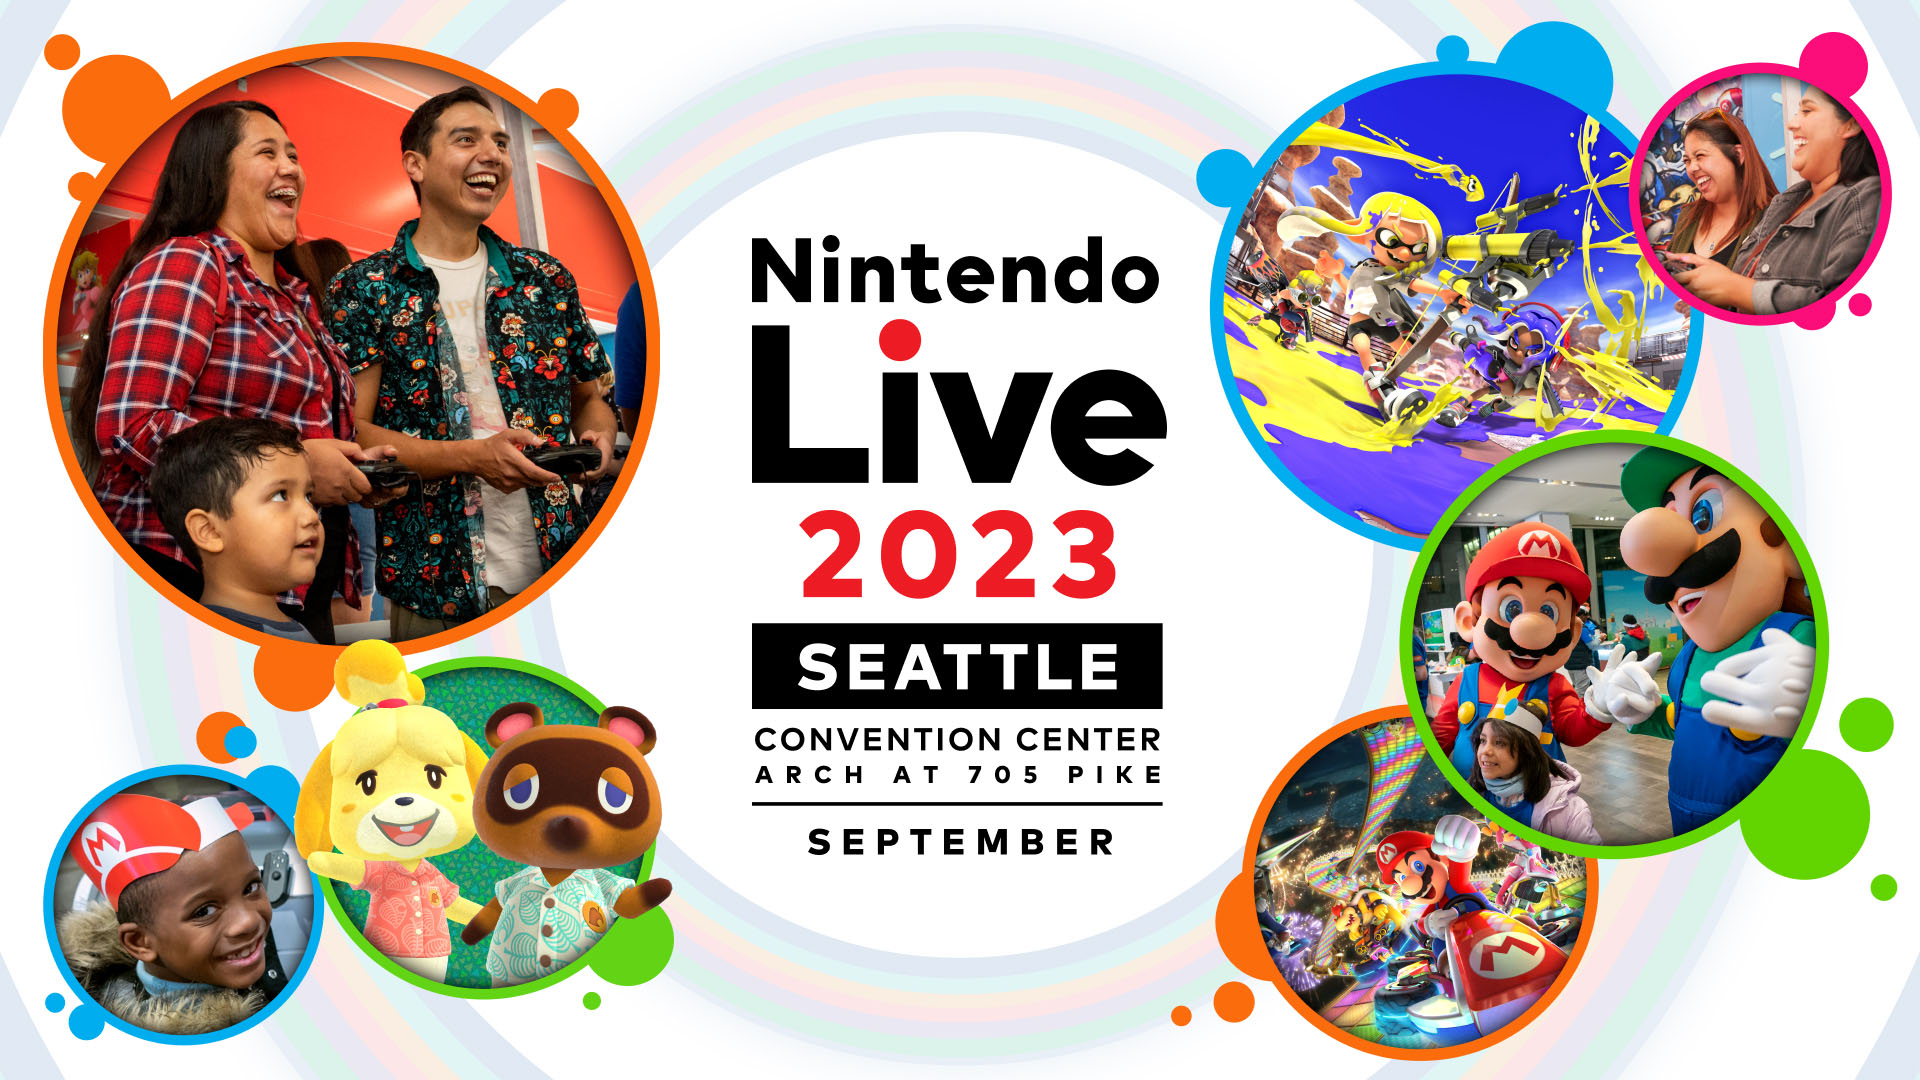 Nintendo Live 2023 Seattle schedule dates announced